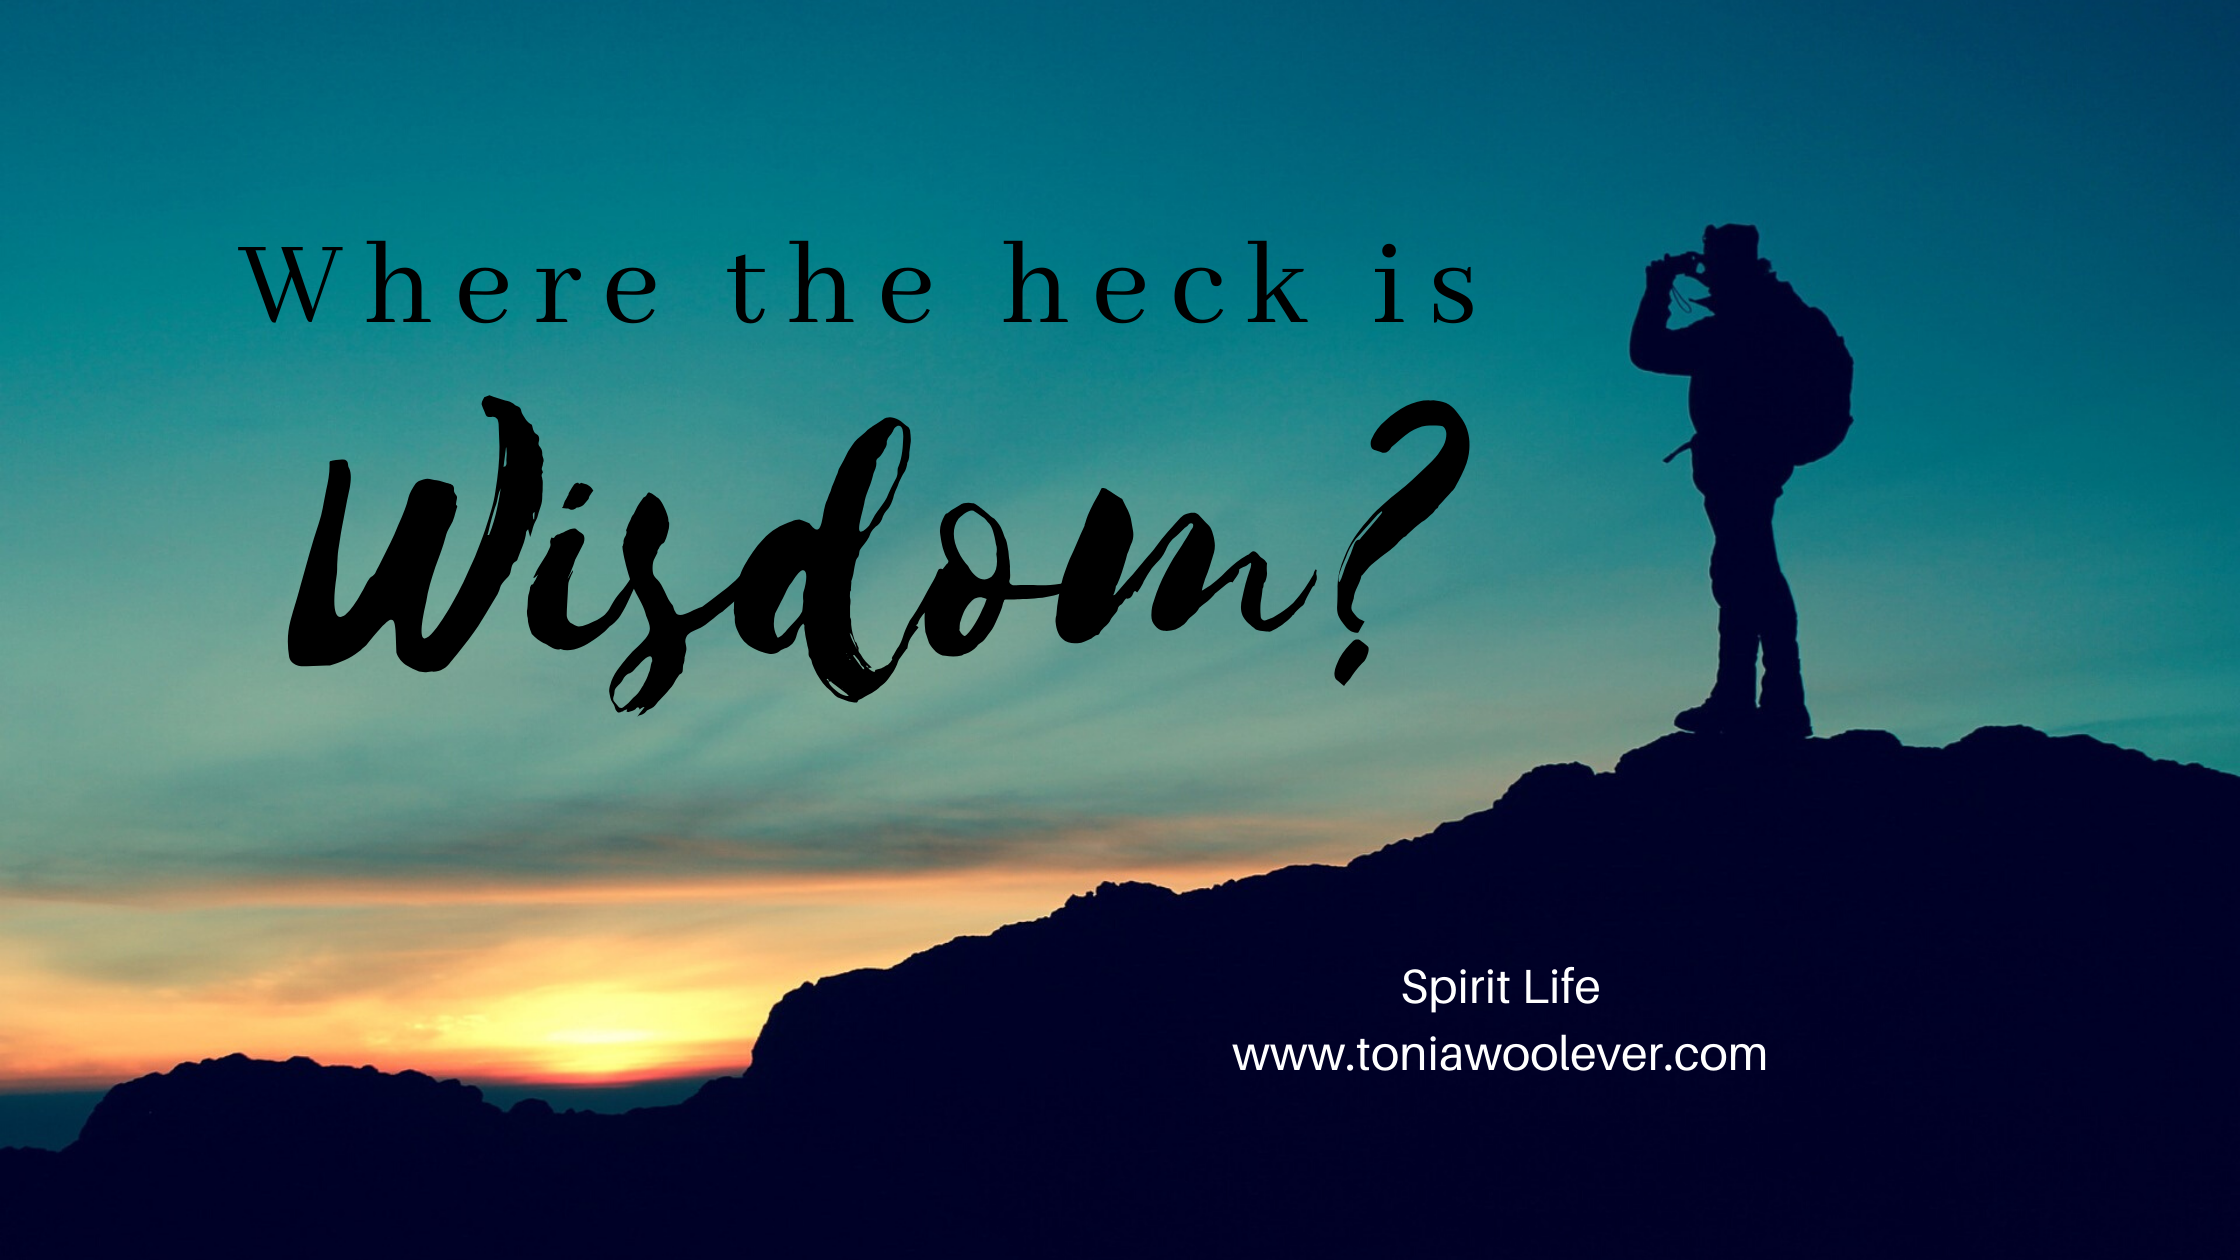 Where is wisdom?